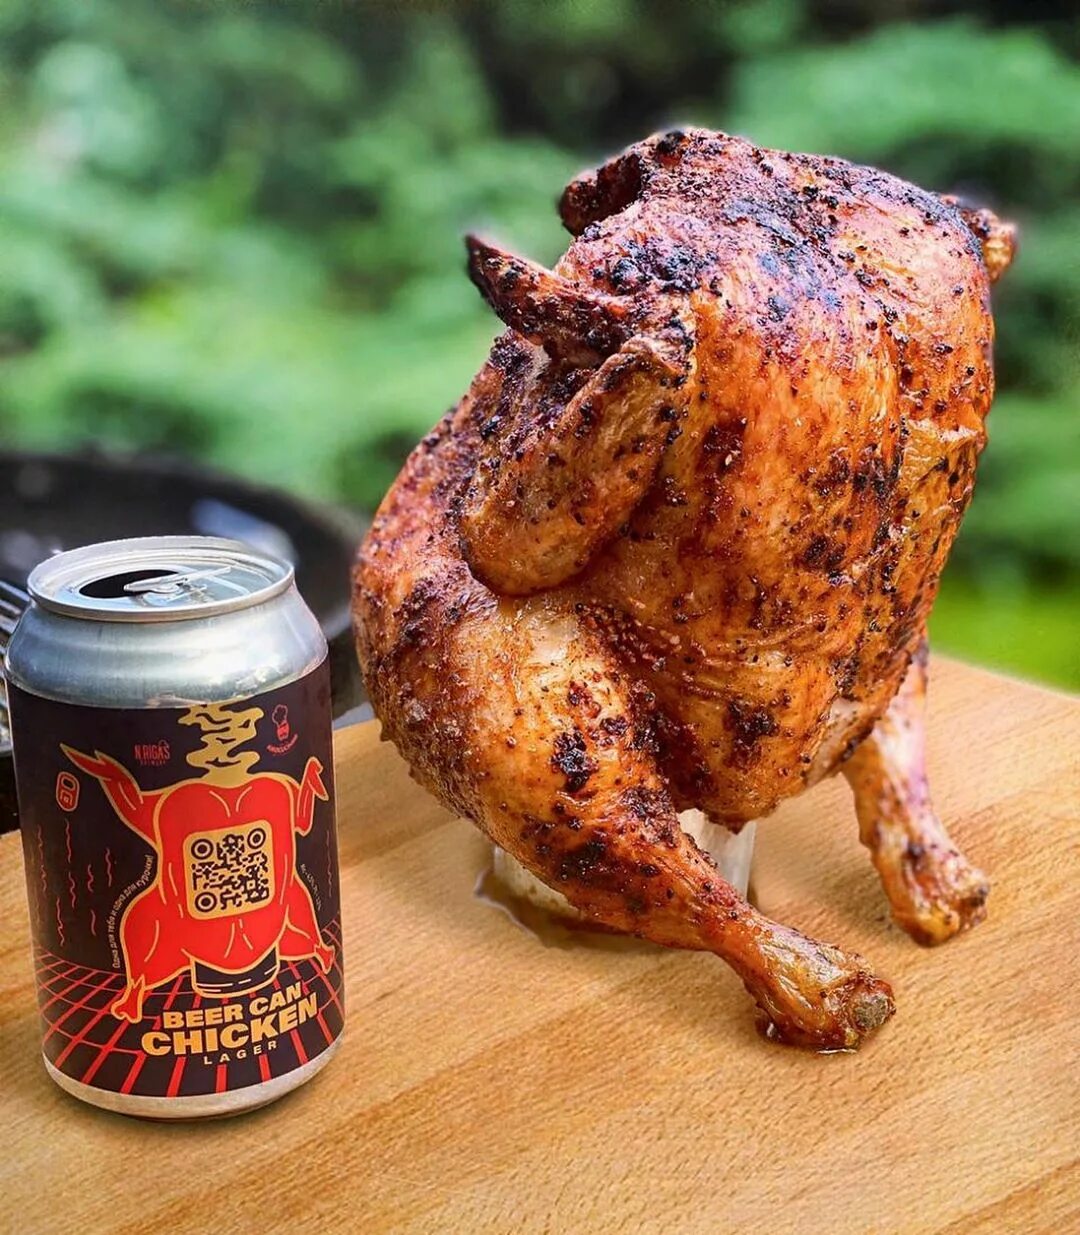 New Riga's Brewery в Instagram: "НОВИНКА 🔥 ⠀ Beer Can Chicken La...